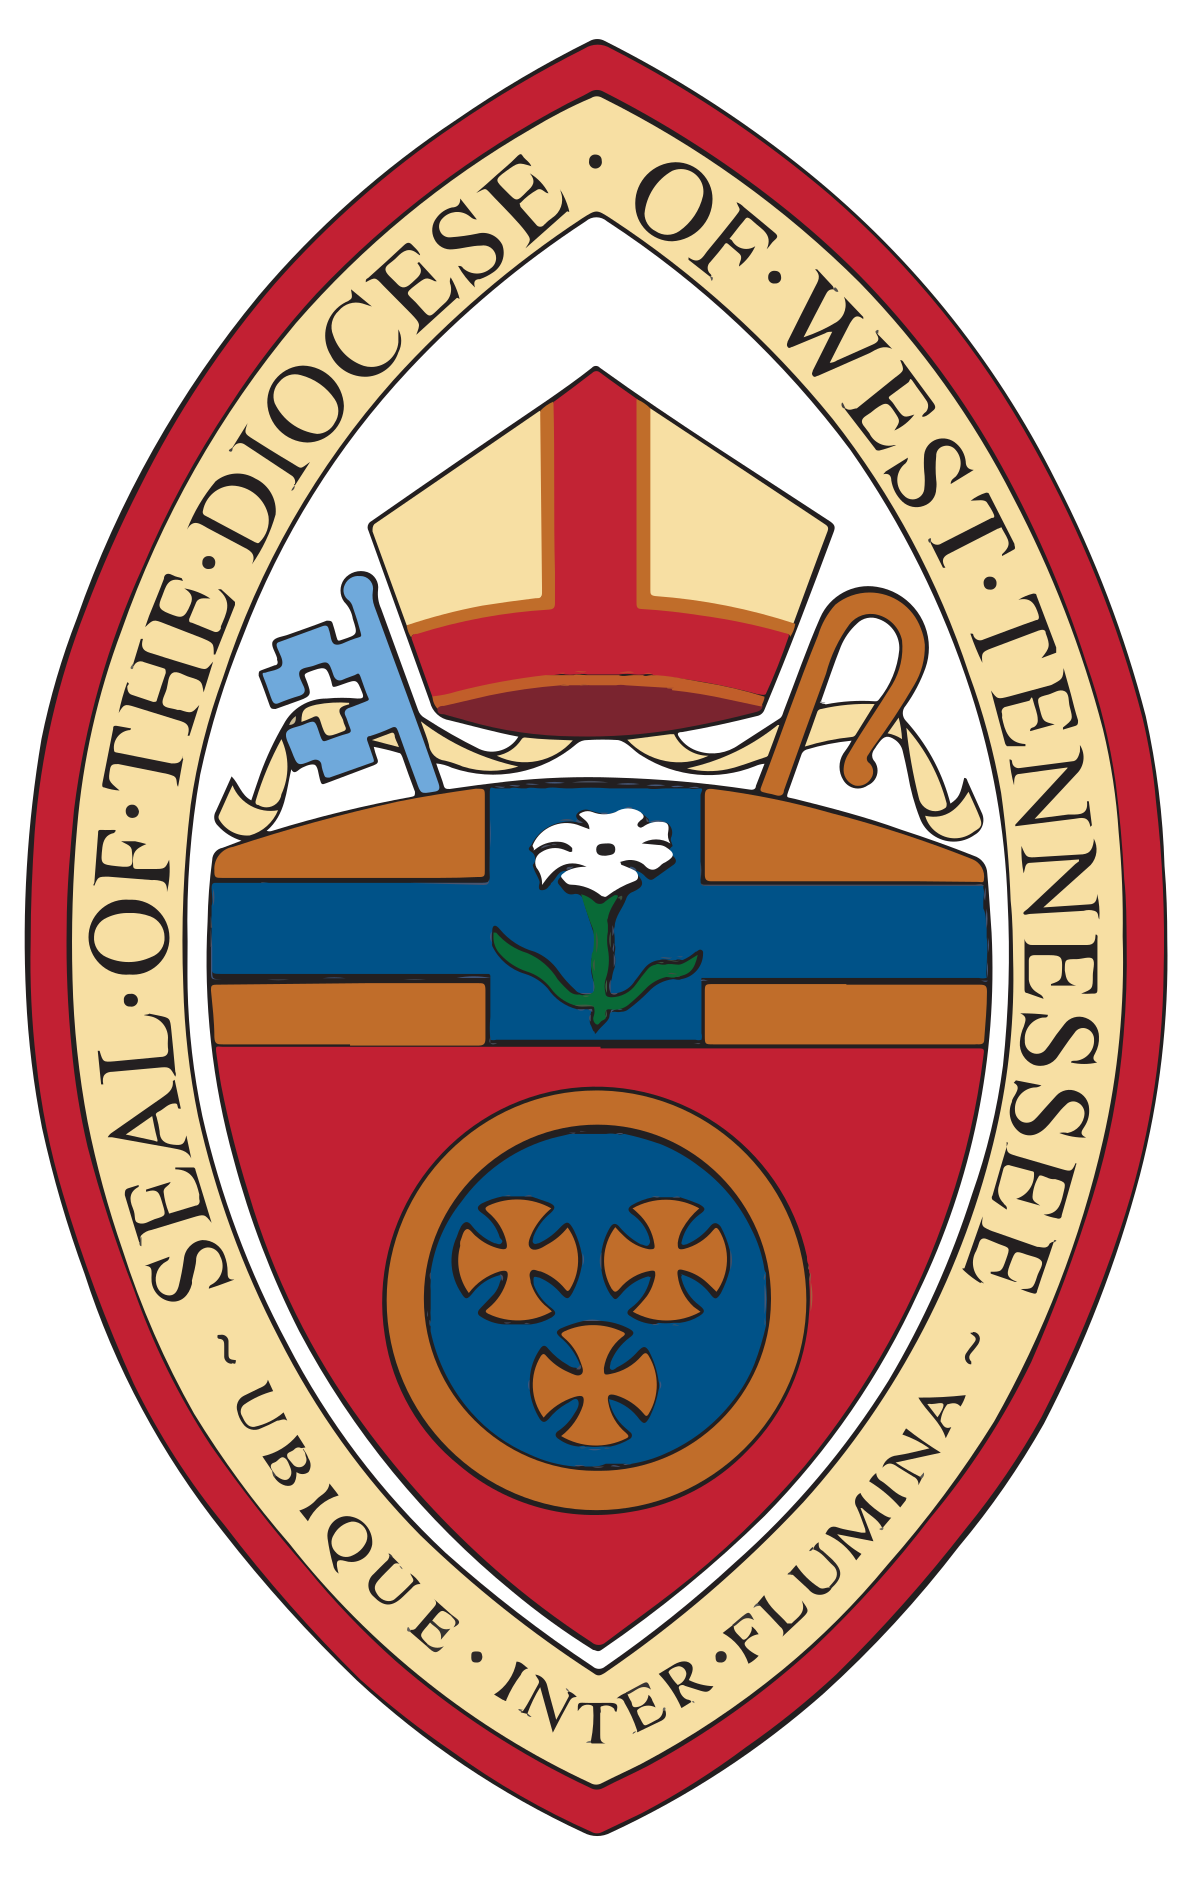 Bishops' Column - Episcopal Diocese of Los Angeles